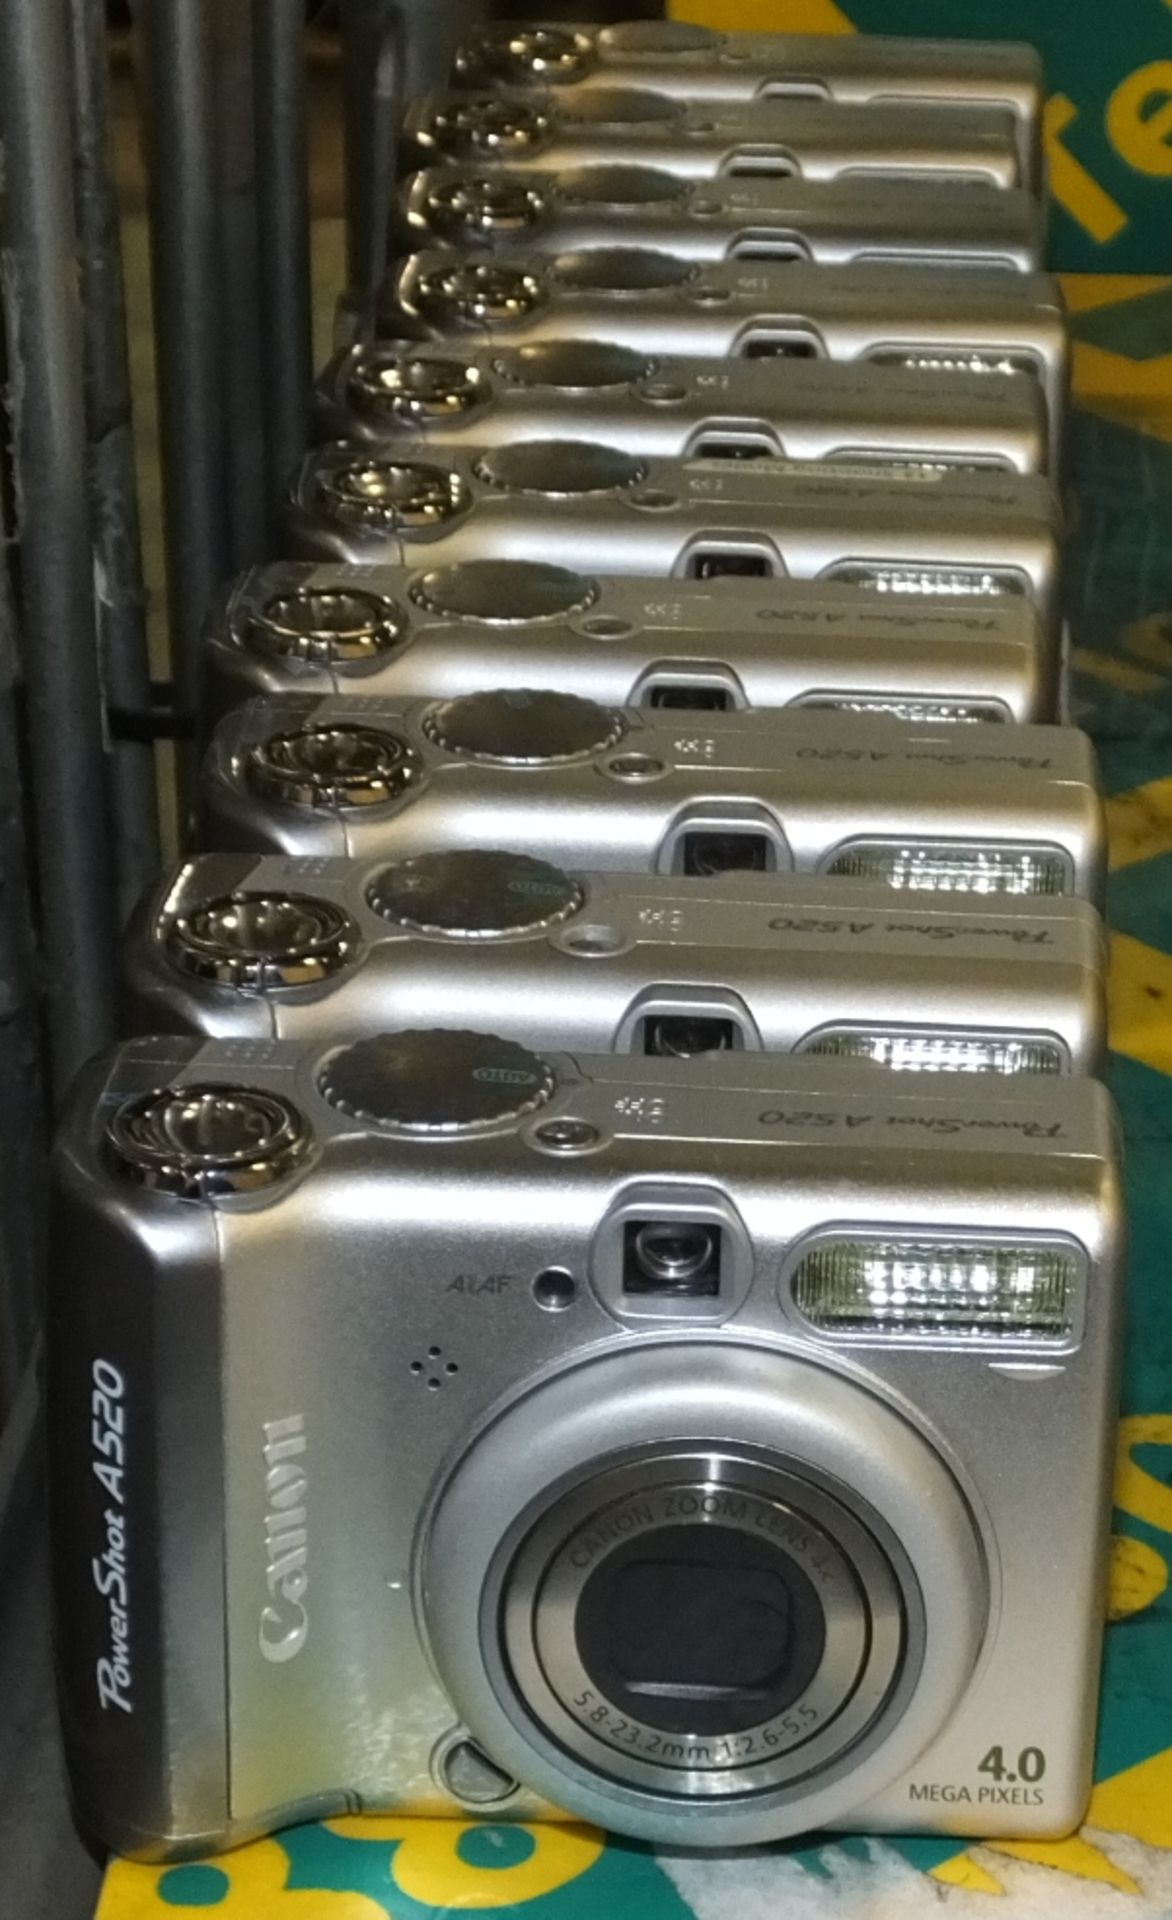 10x Canon Powershot A520 digital cameras